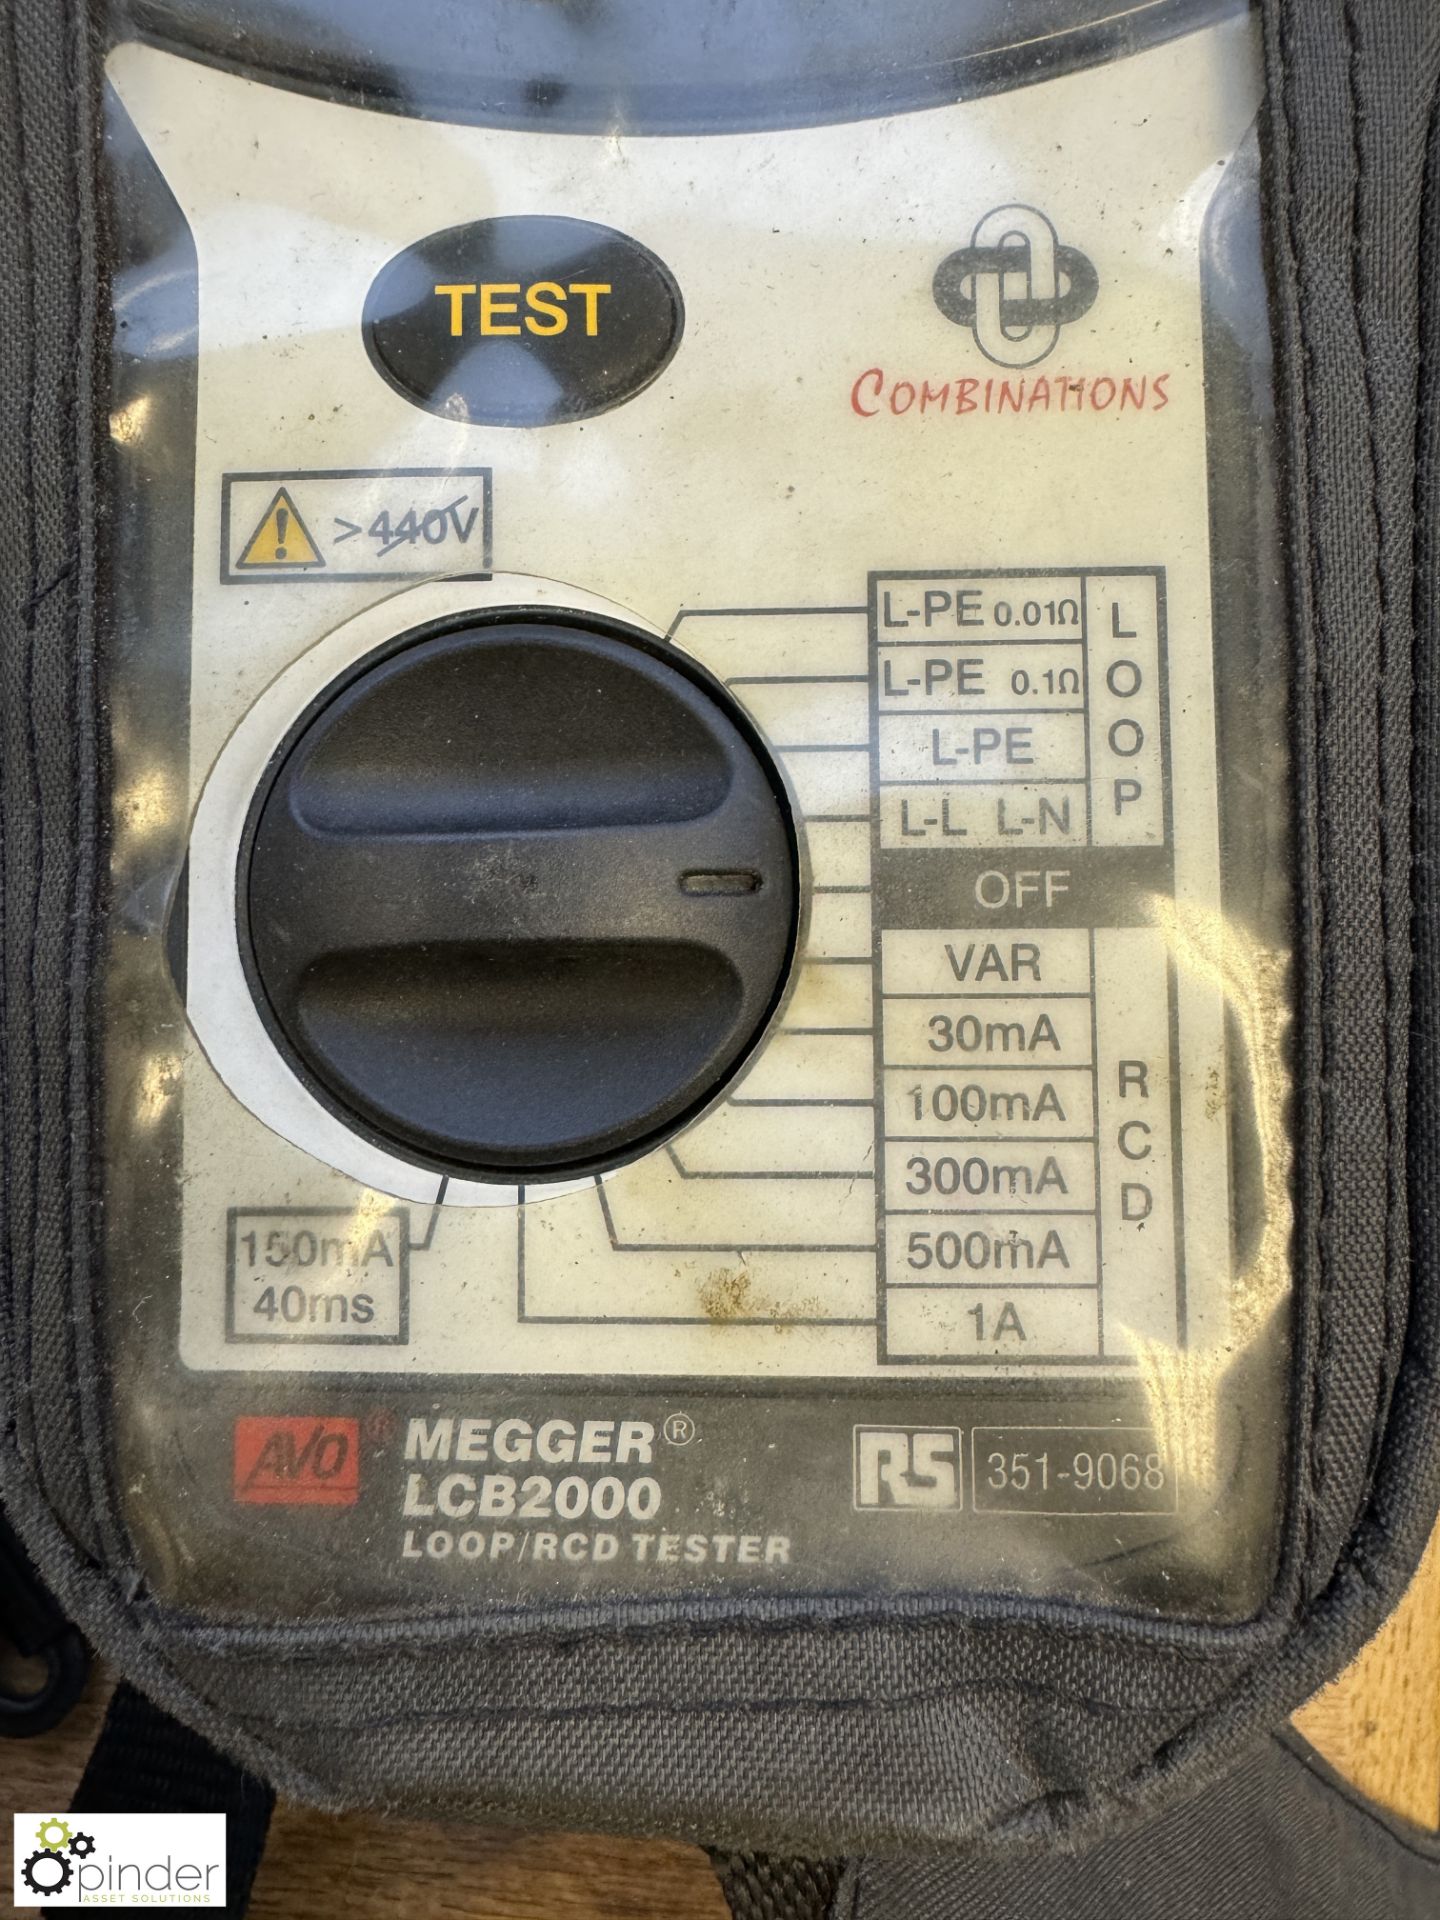 Megger LCB2000 Loop/RCD Tester - Image 2 of 4